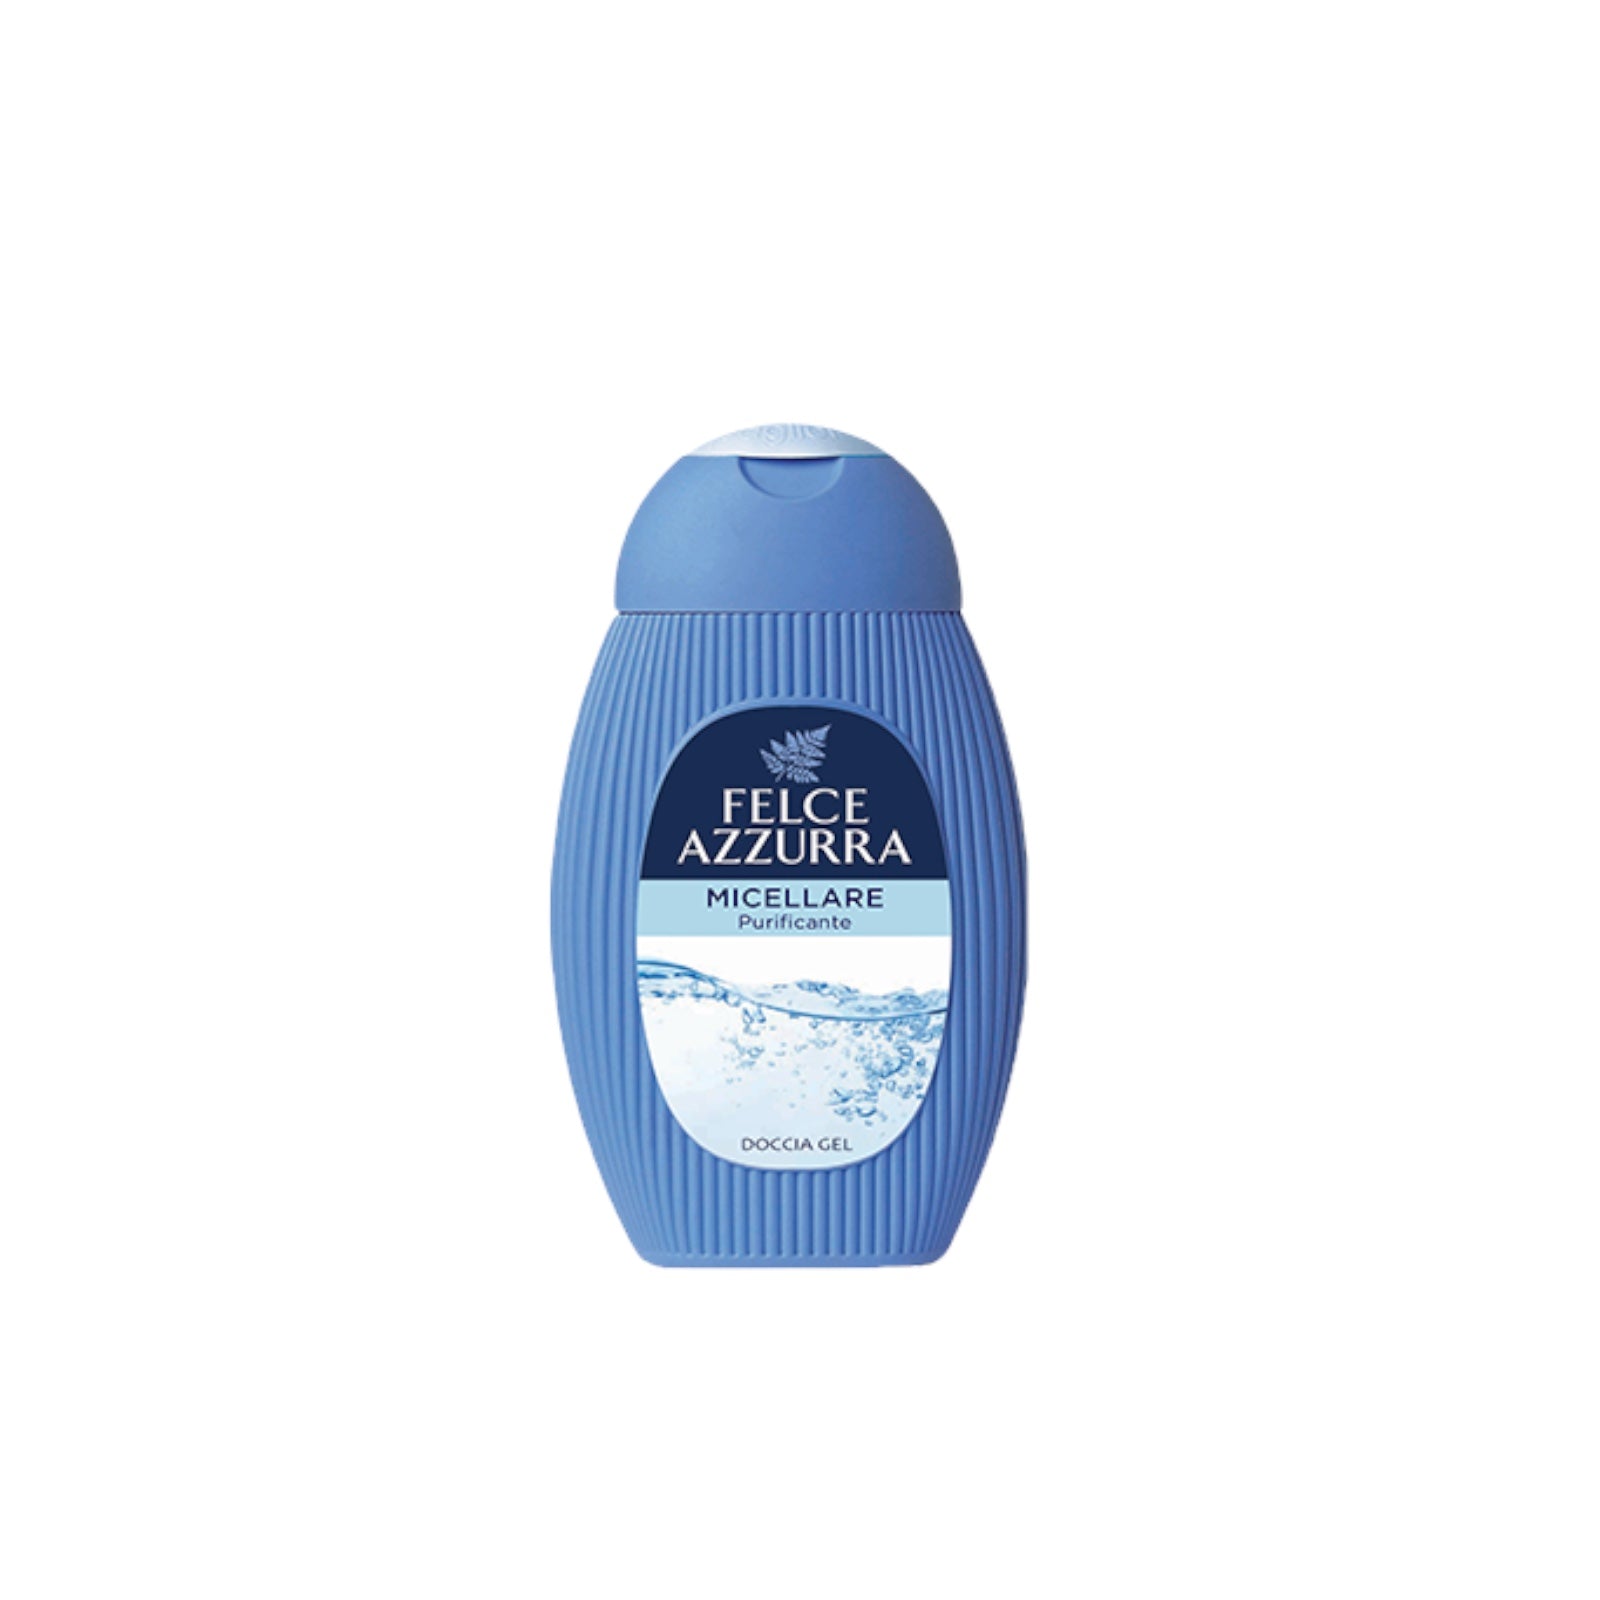 Cif Crema Ultra Blanco Limpiador Cremoso Disinfectant Cream Cleaner with  Bleach, 375 g / 13.22 oz